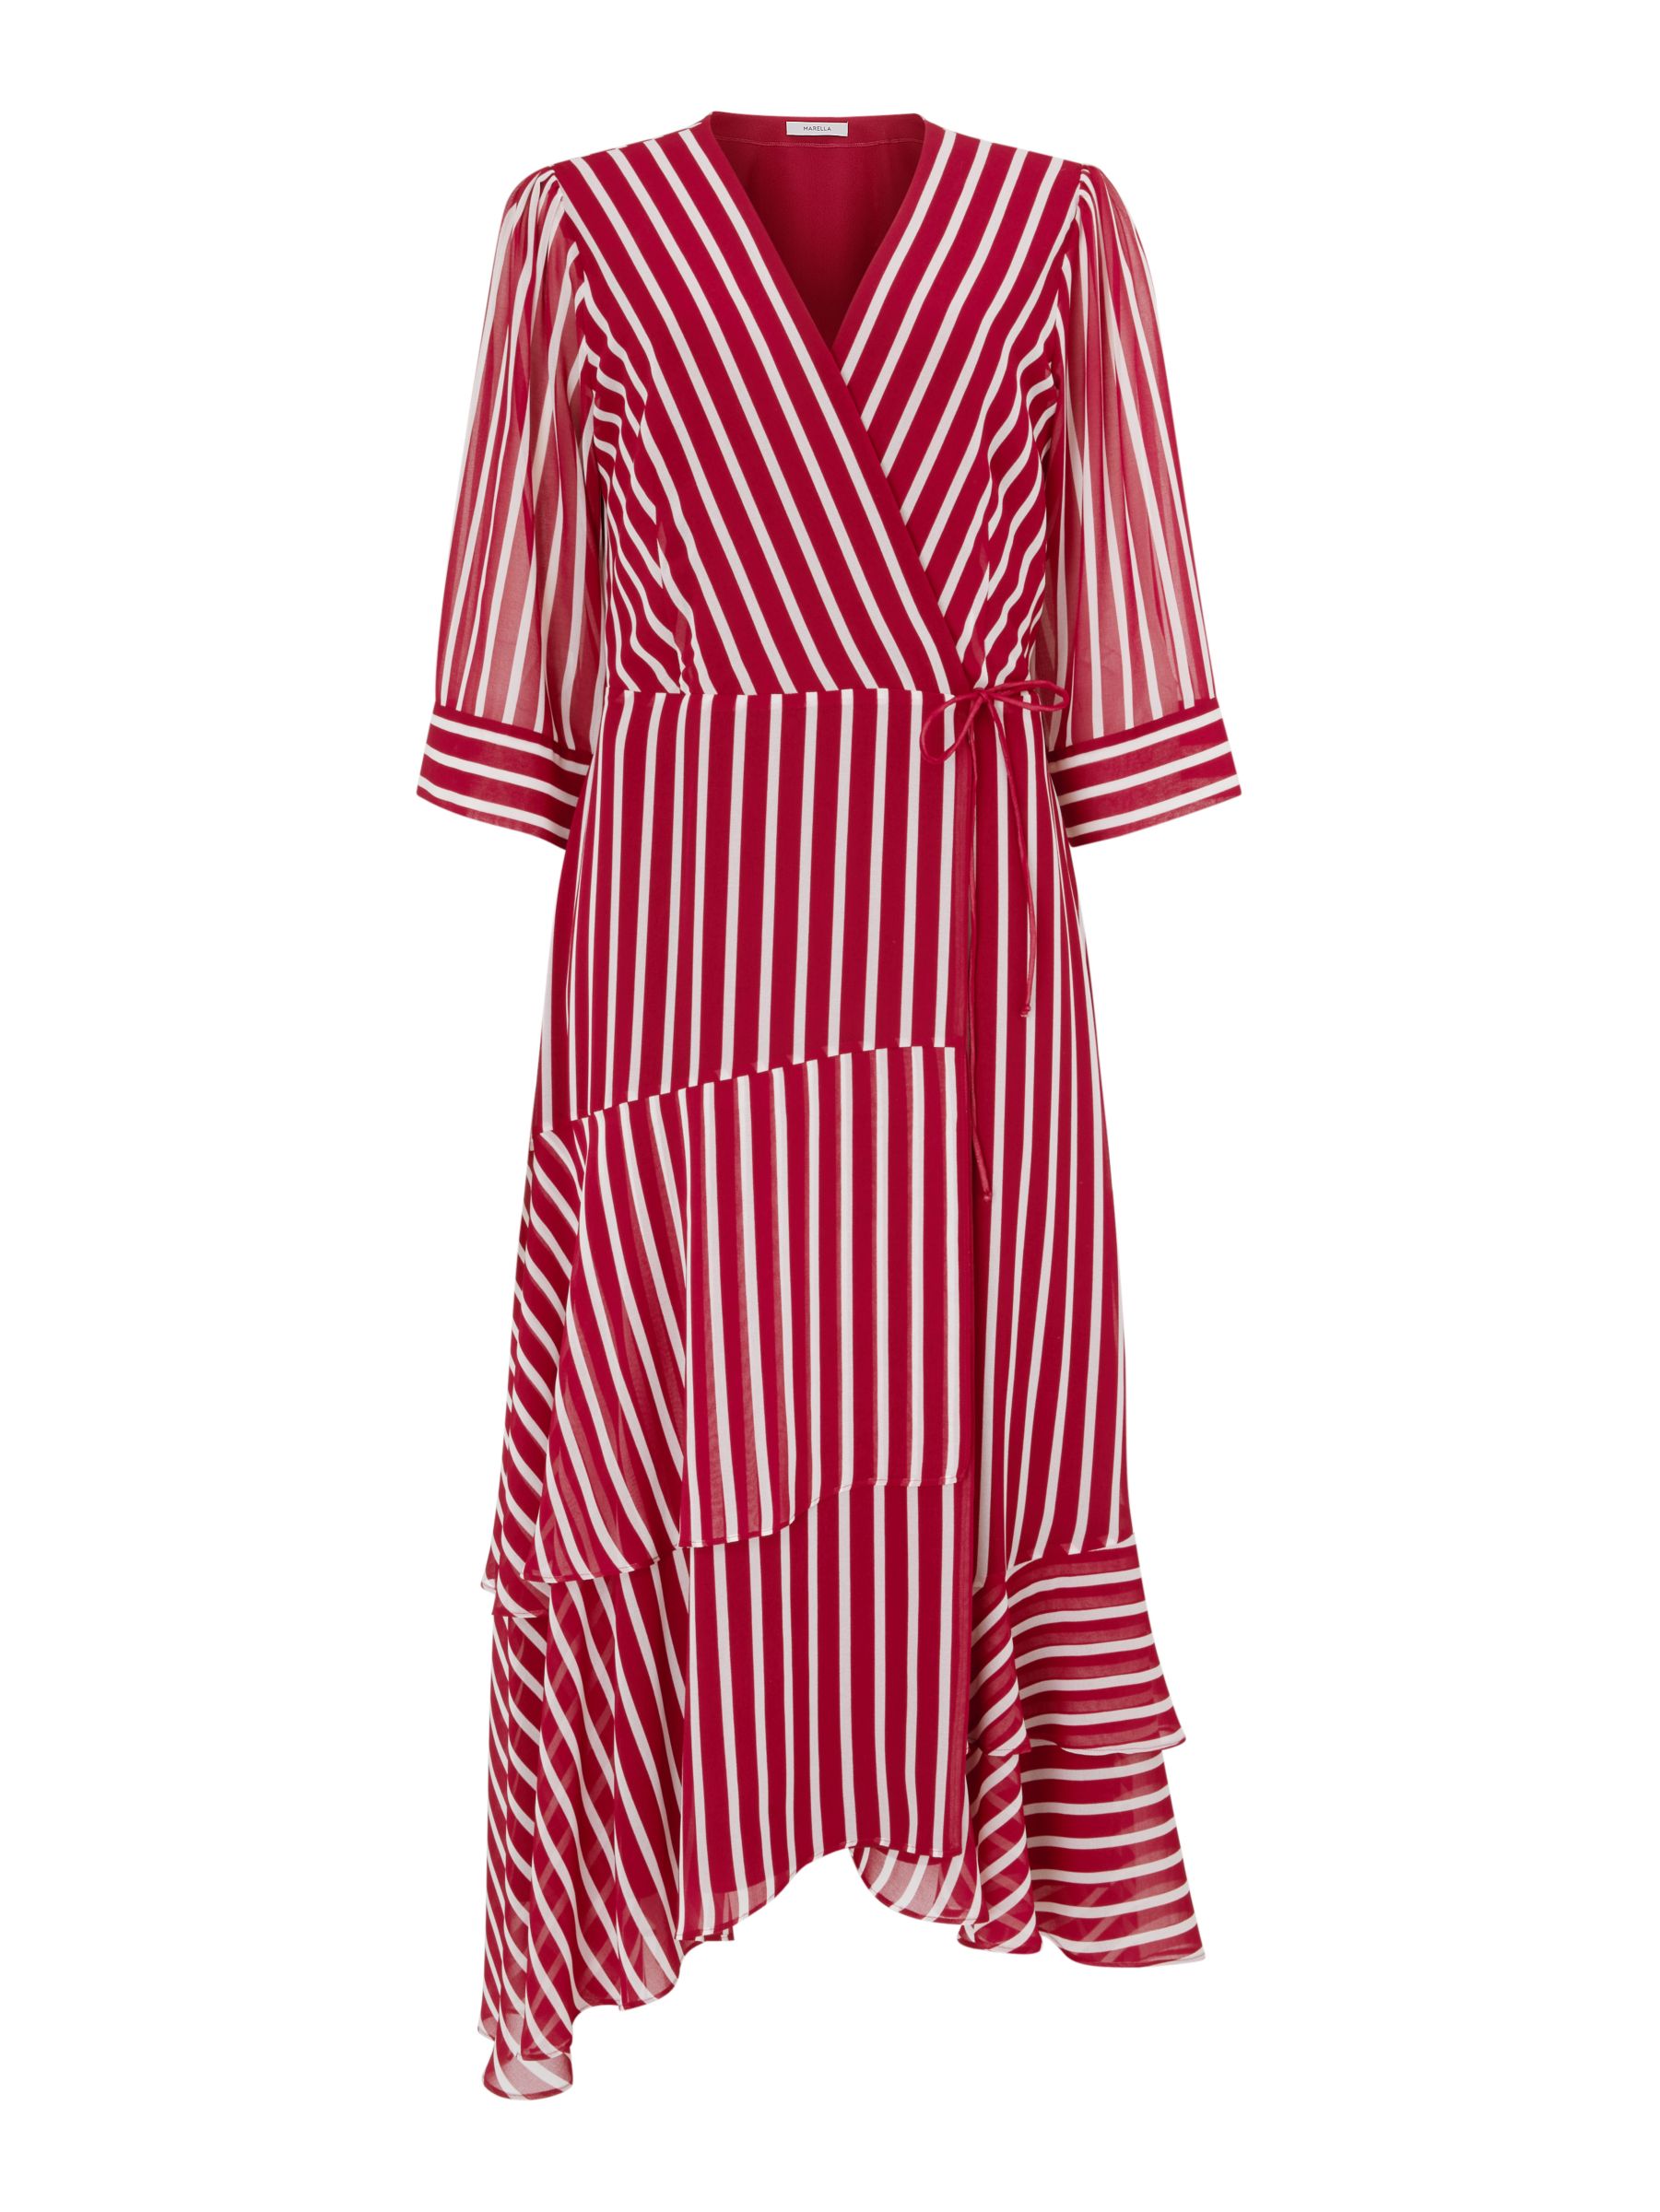 Marella Fortuna Stripe Dress, Red